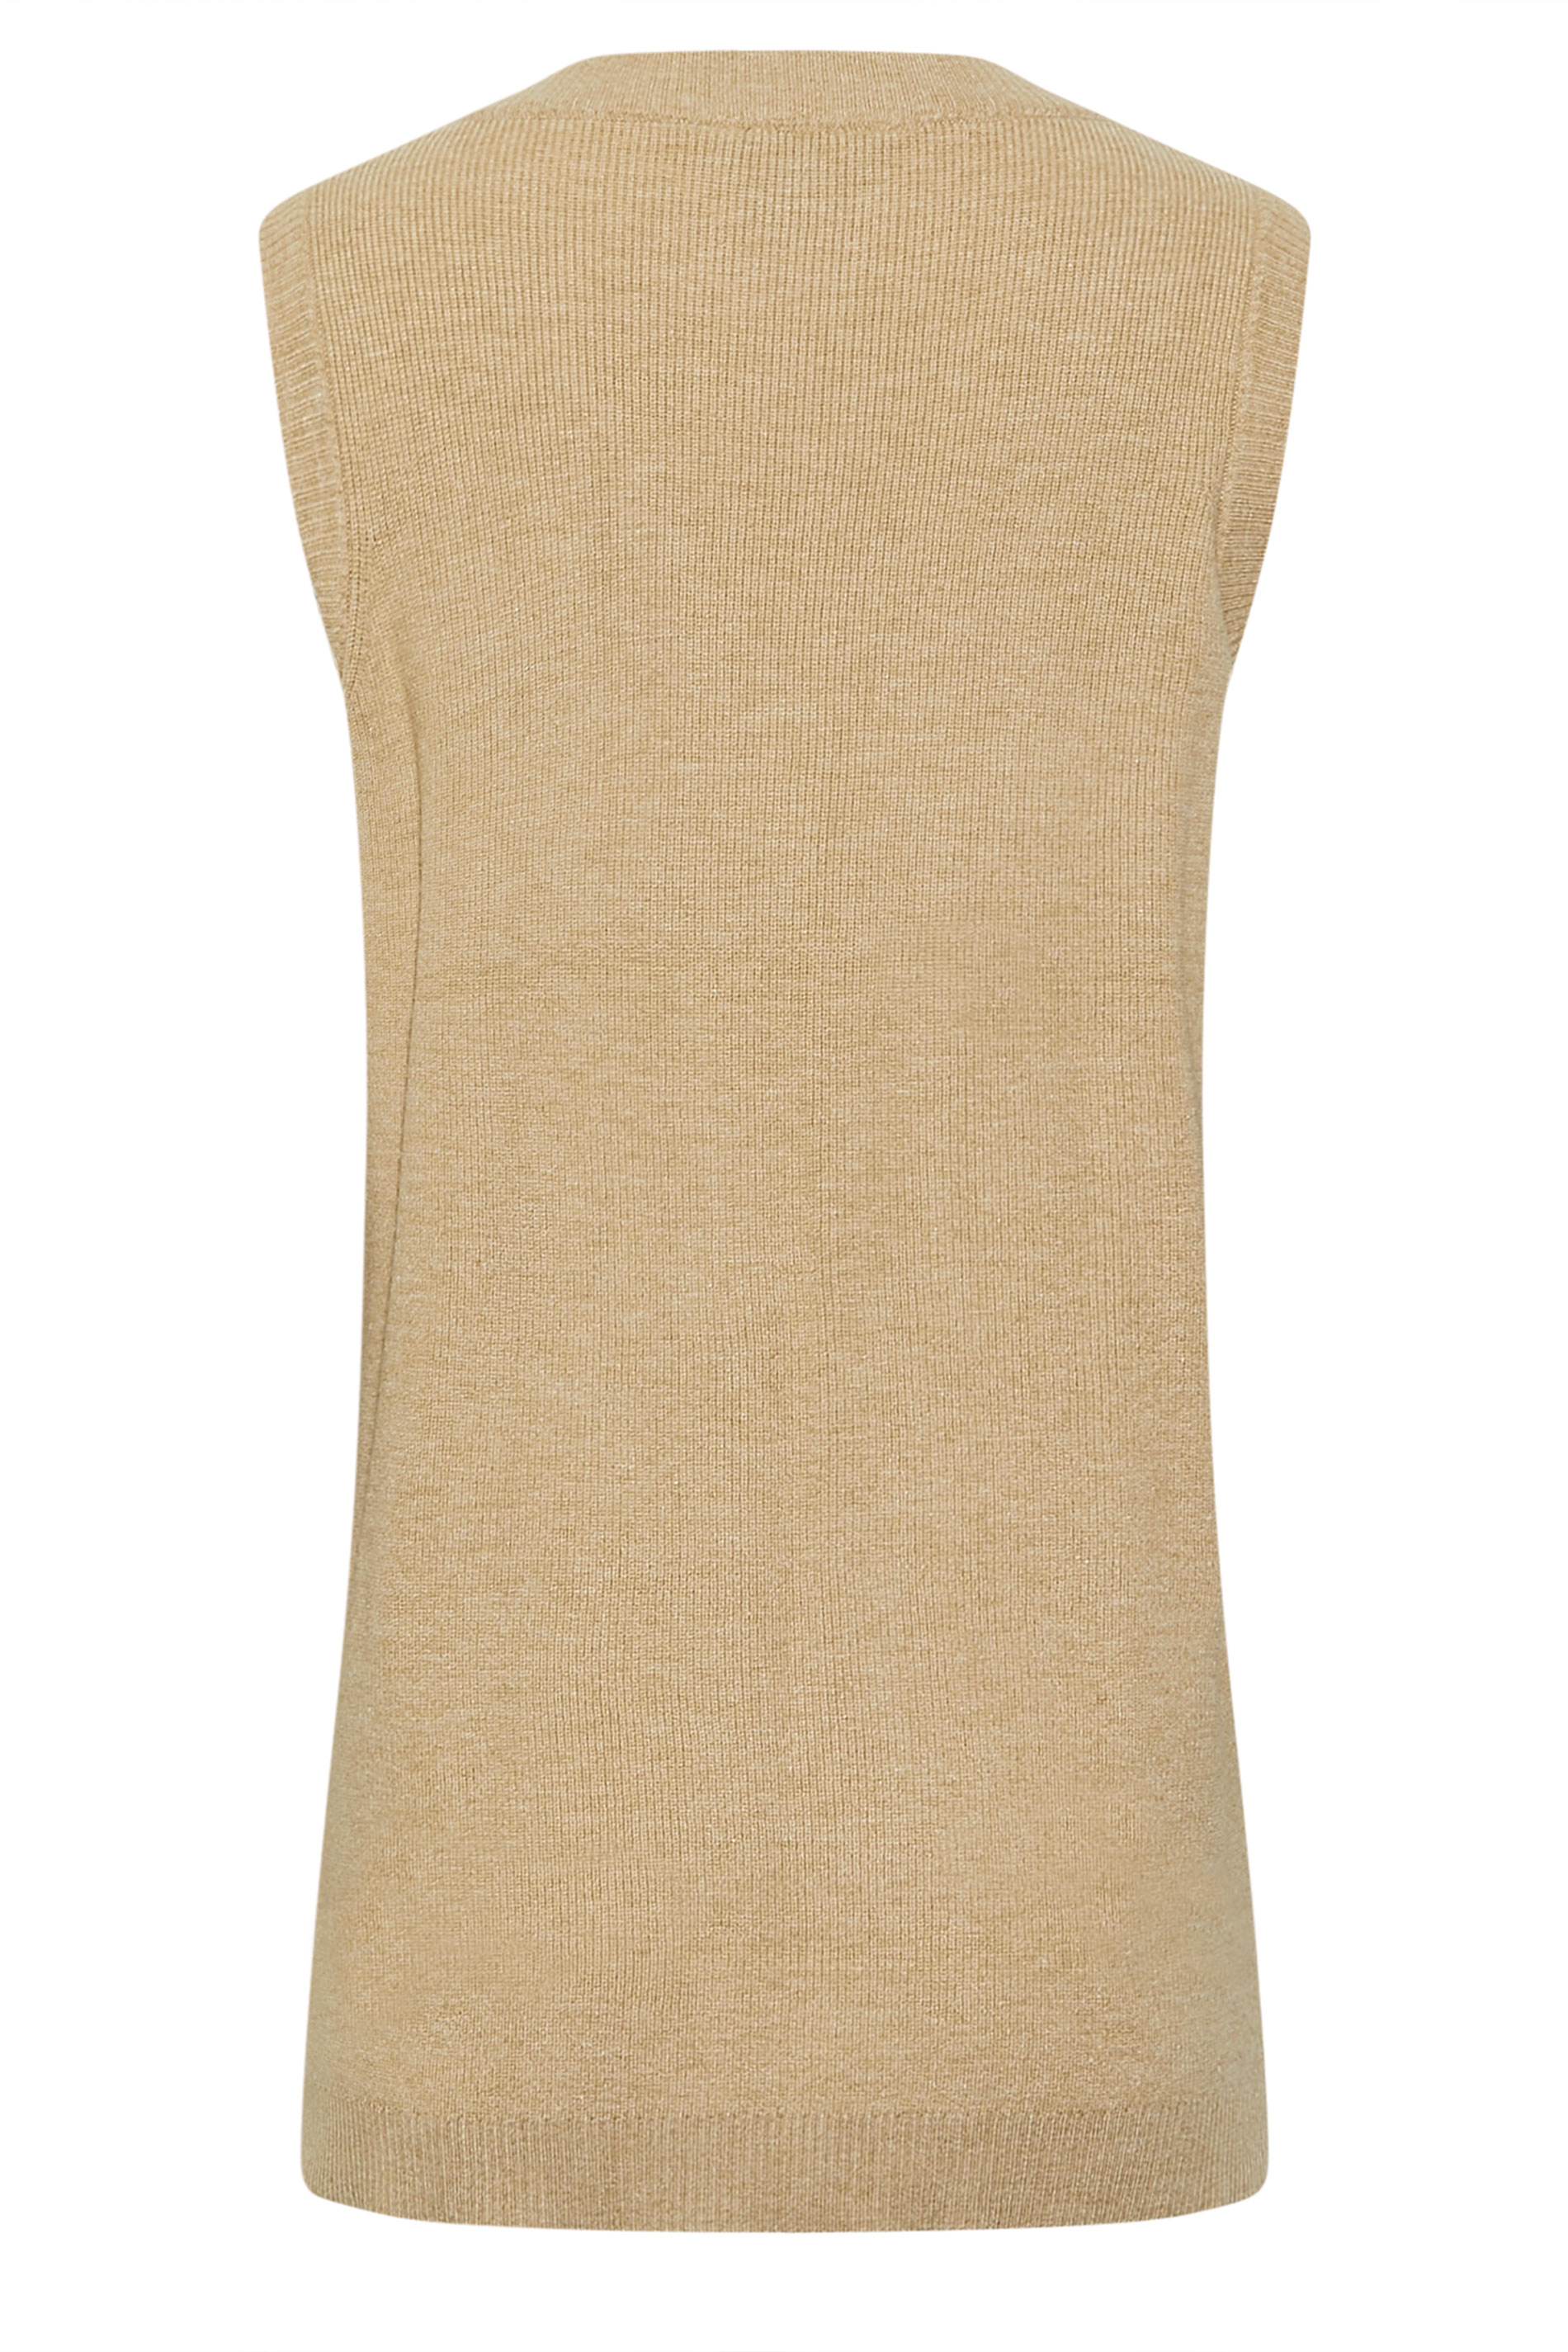 LTS Tall Women's Beige Brown Knitted Vest Top | Long Tall Sally 3